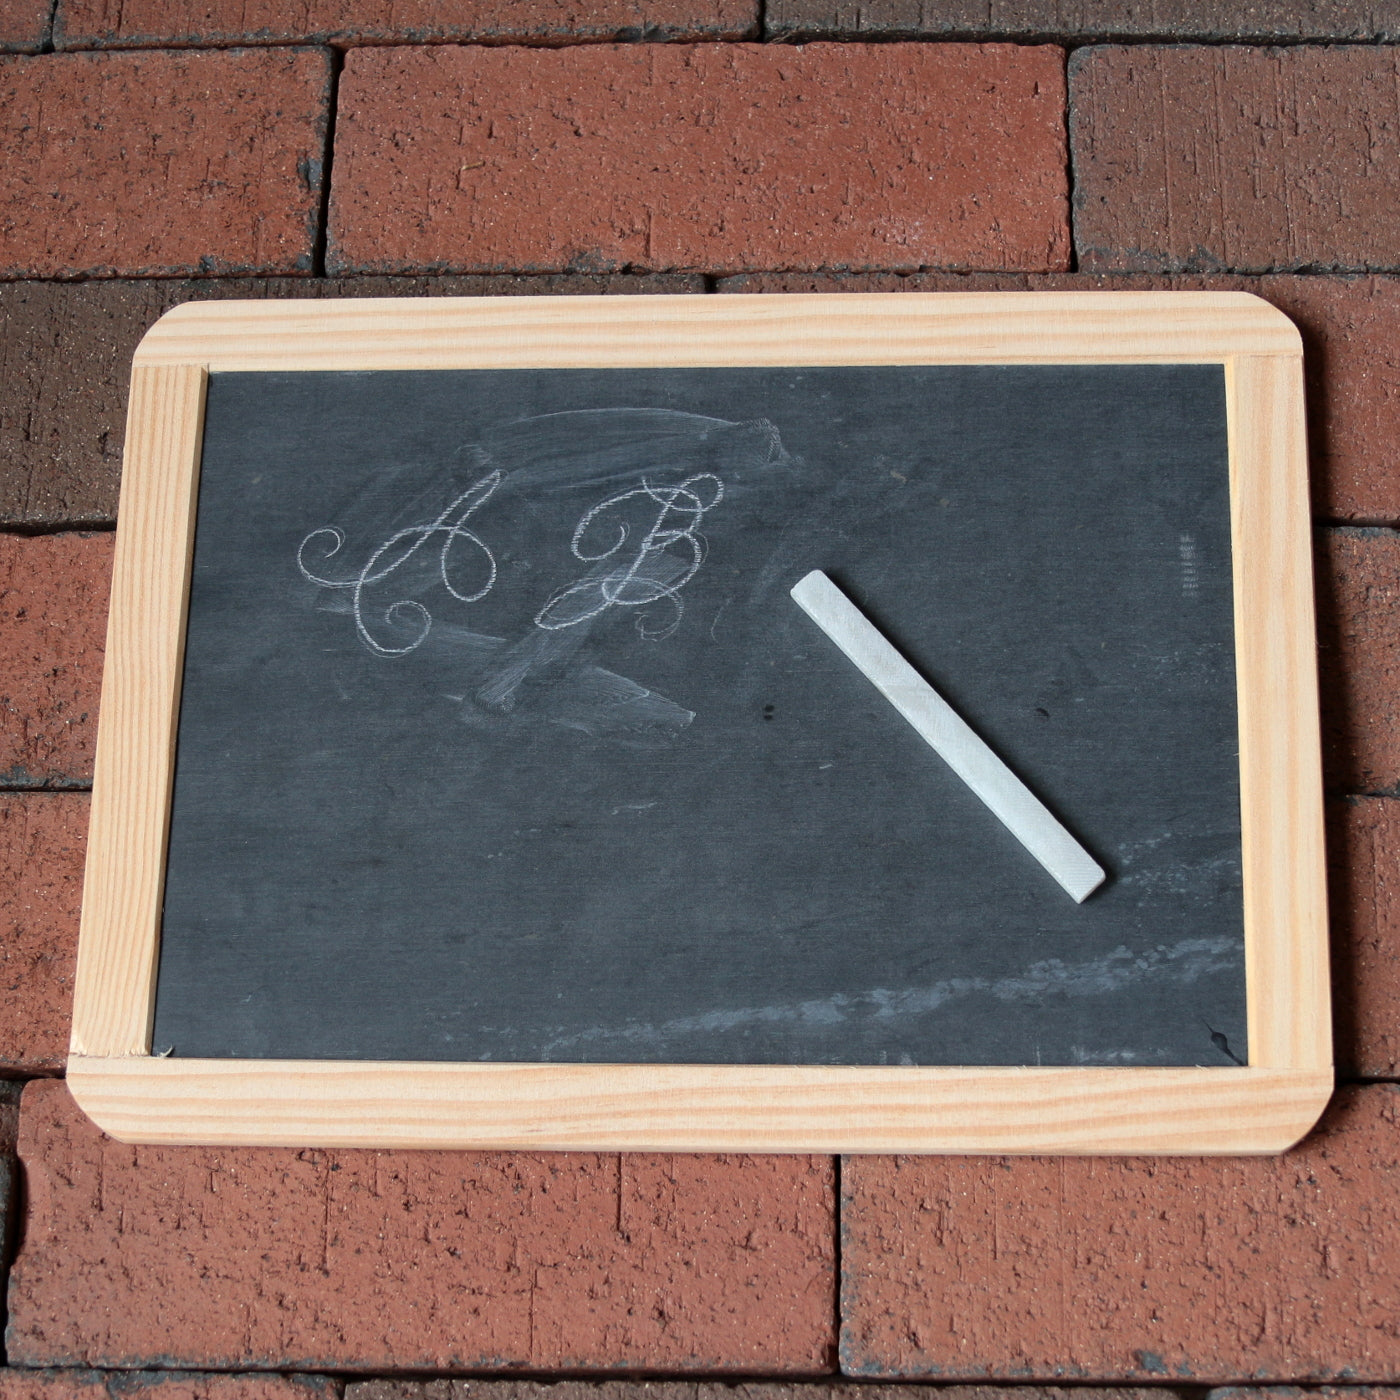 Pin by juturus on Slate Pencils  Homemade sidewalk chalk, Slate stone,  Sidewalk chalk